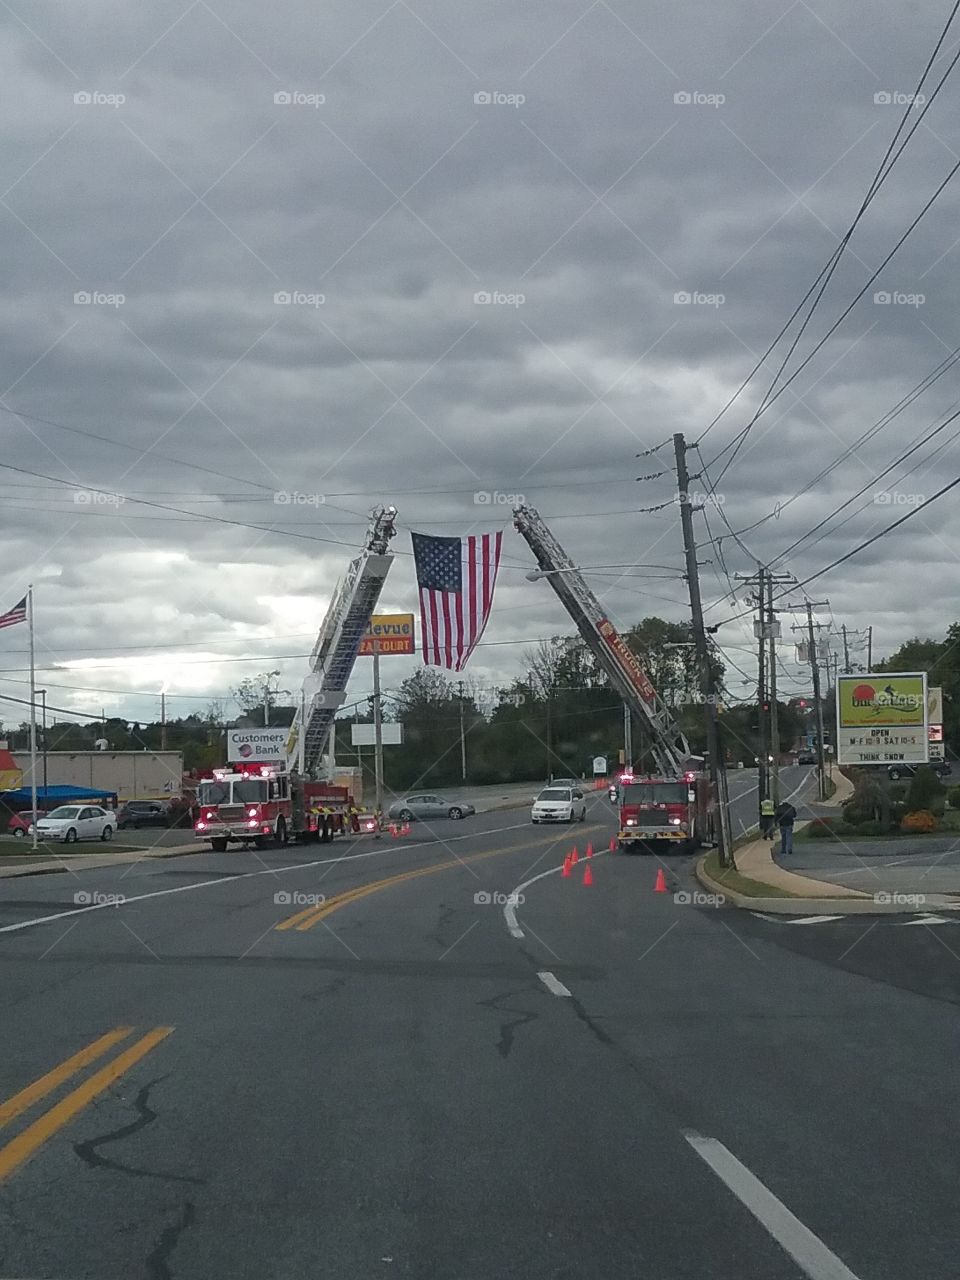 2 Firetrucks hanging the flag